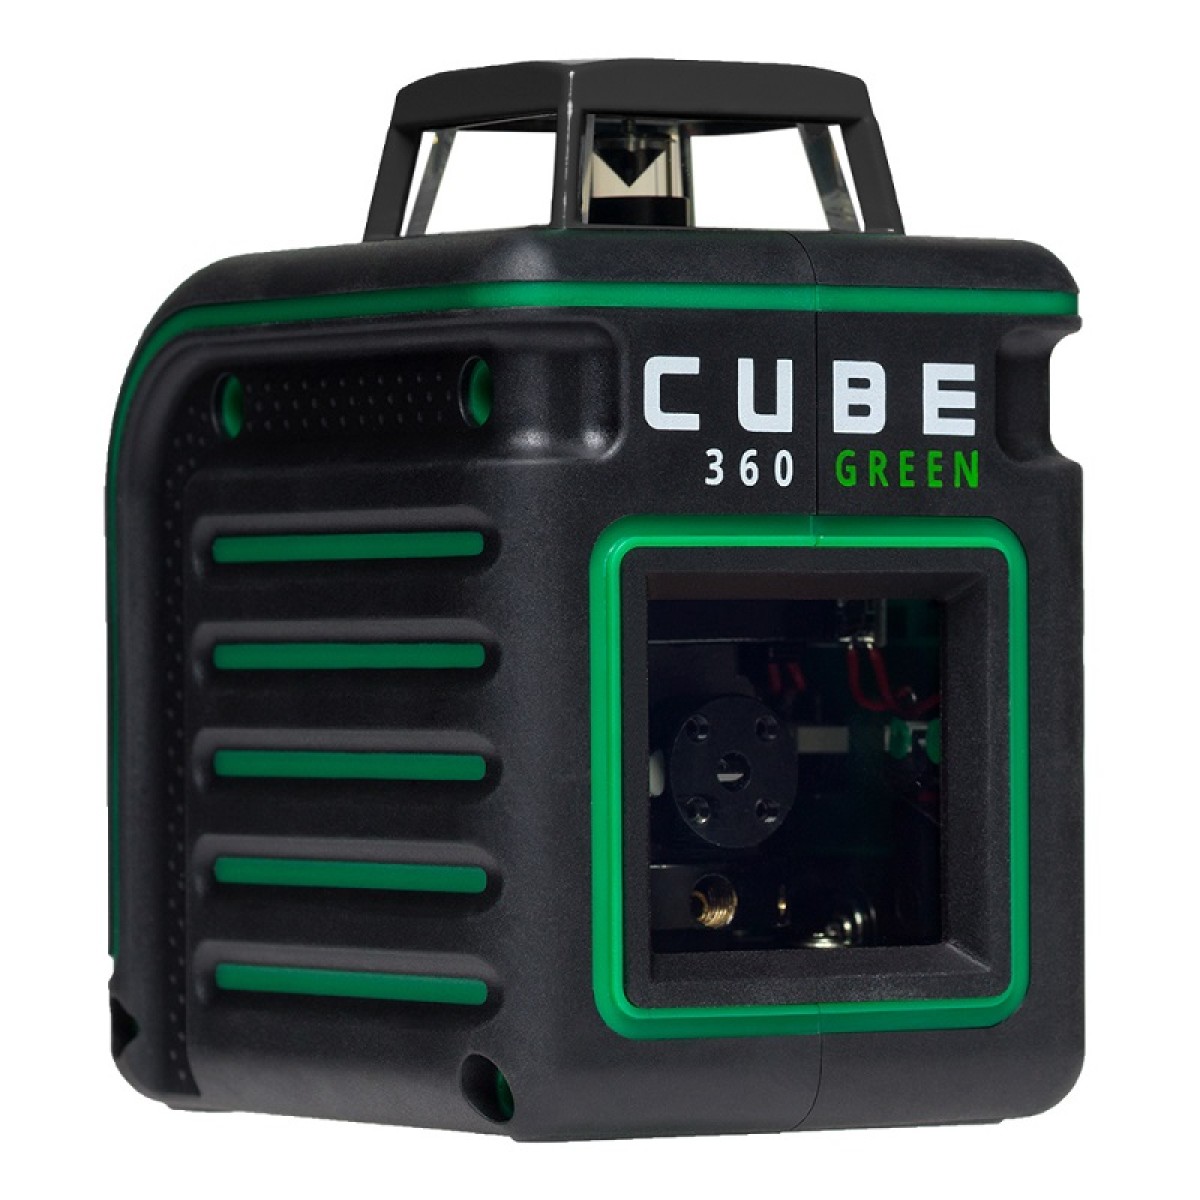 Cube 360 ultimate edition. Ada Cube 360 Green professional Edition. Уровень лазерный ada Cube 360 professional Edition. Ada Cube 360 Ultimate Edition. Ada 3-360 Green Ultimate Edition.